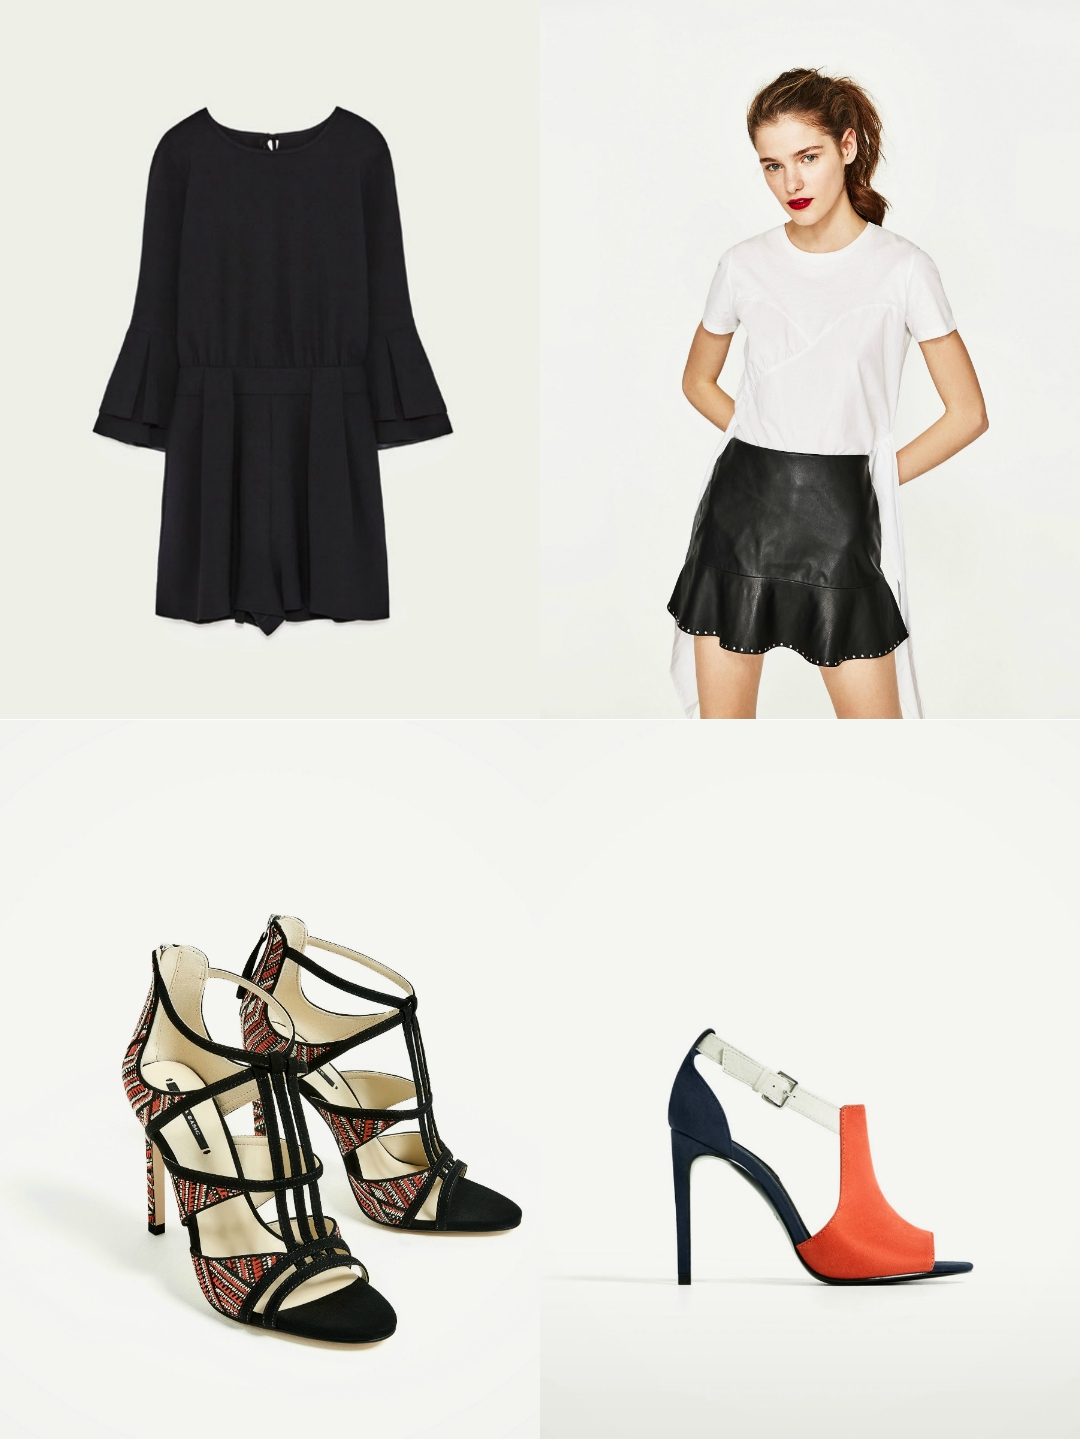 Eniwhere Fashion - Zara Spring Collection 